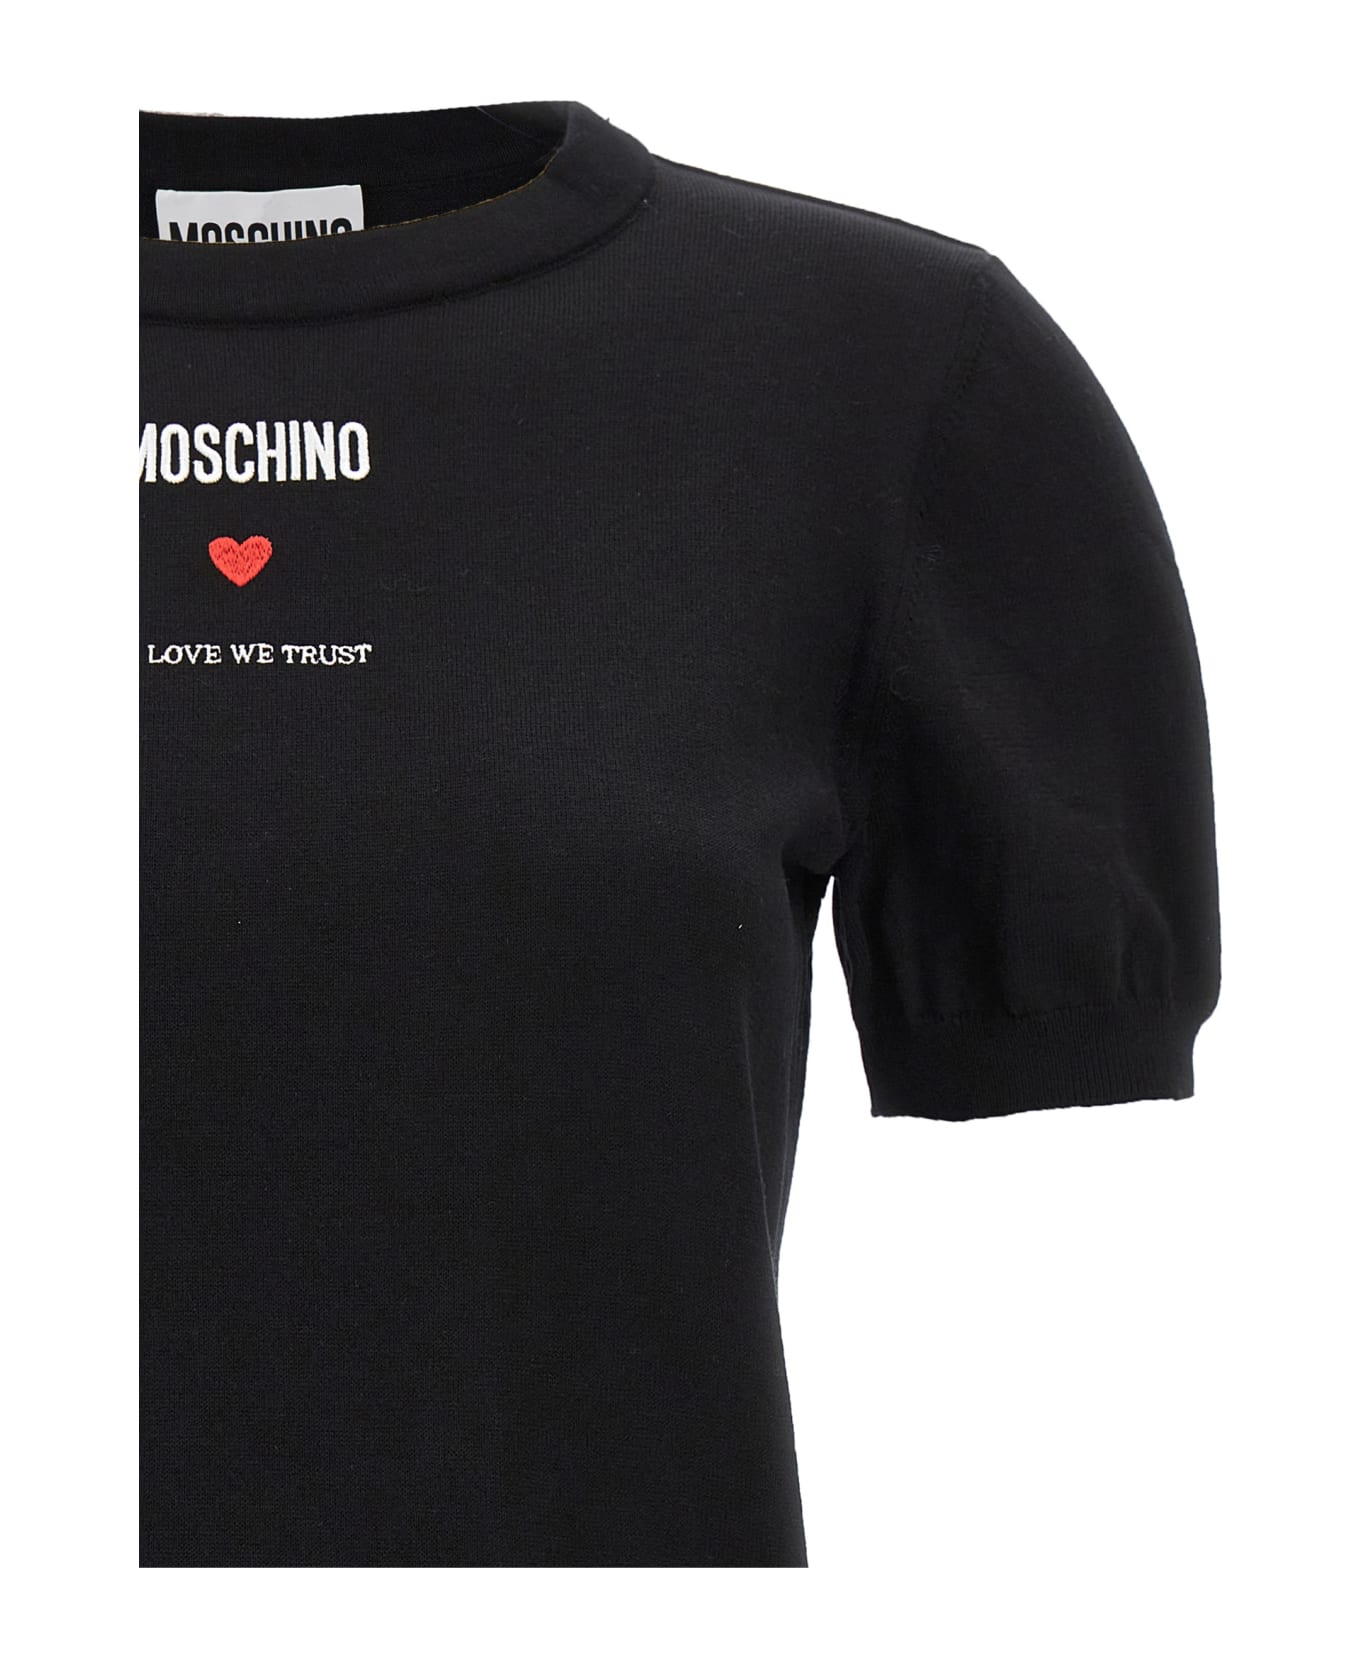 Moschino 'in Love We Trust' Sweater - Black  